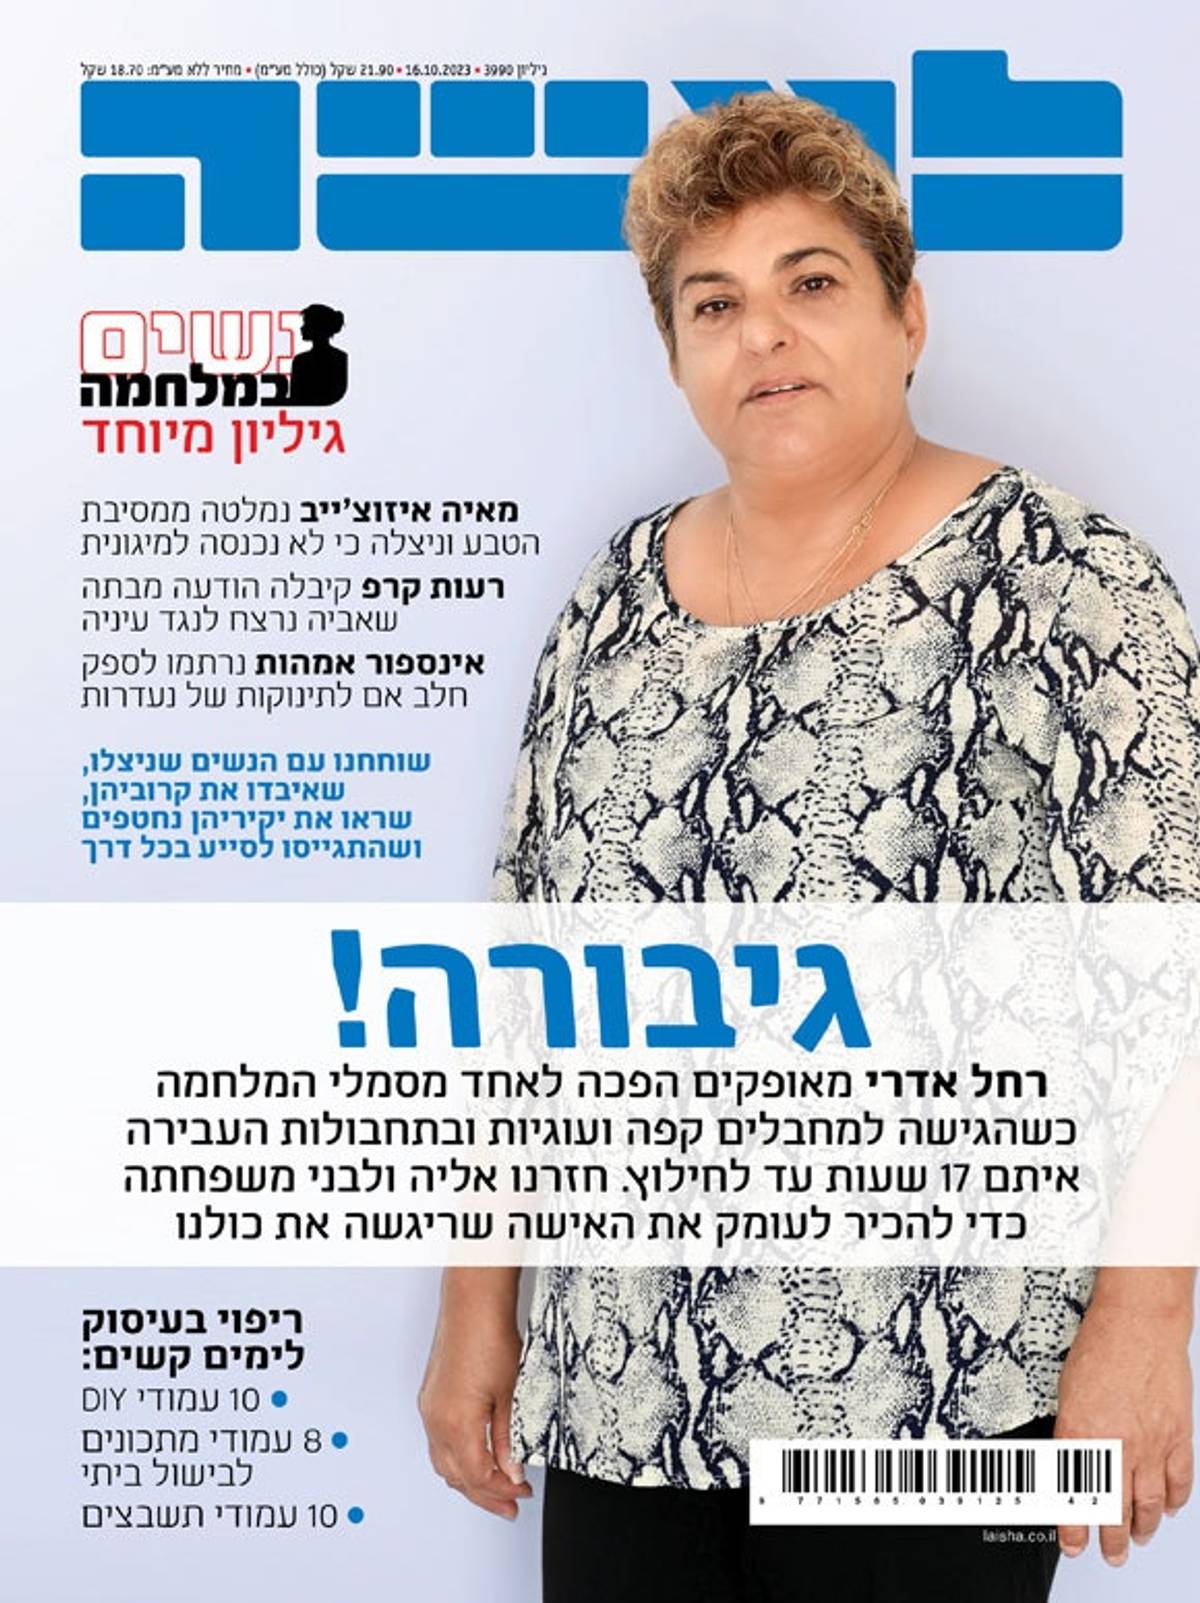 Rachel on the cover of La’Isha, Israel’s leading women’s magazine